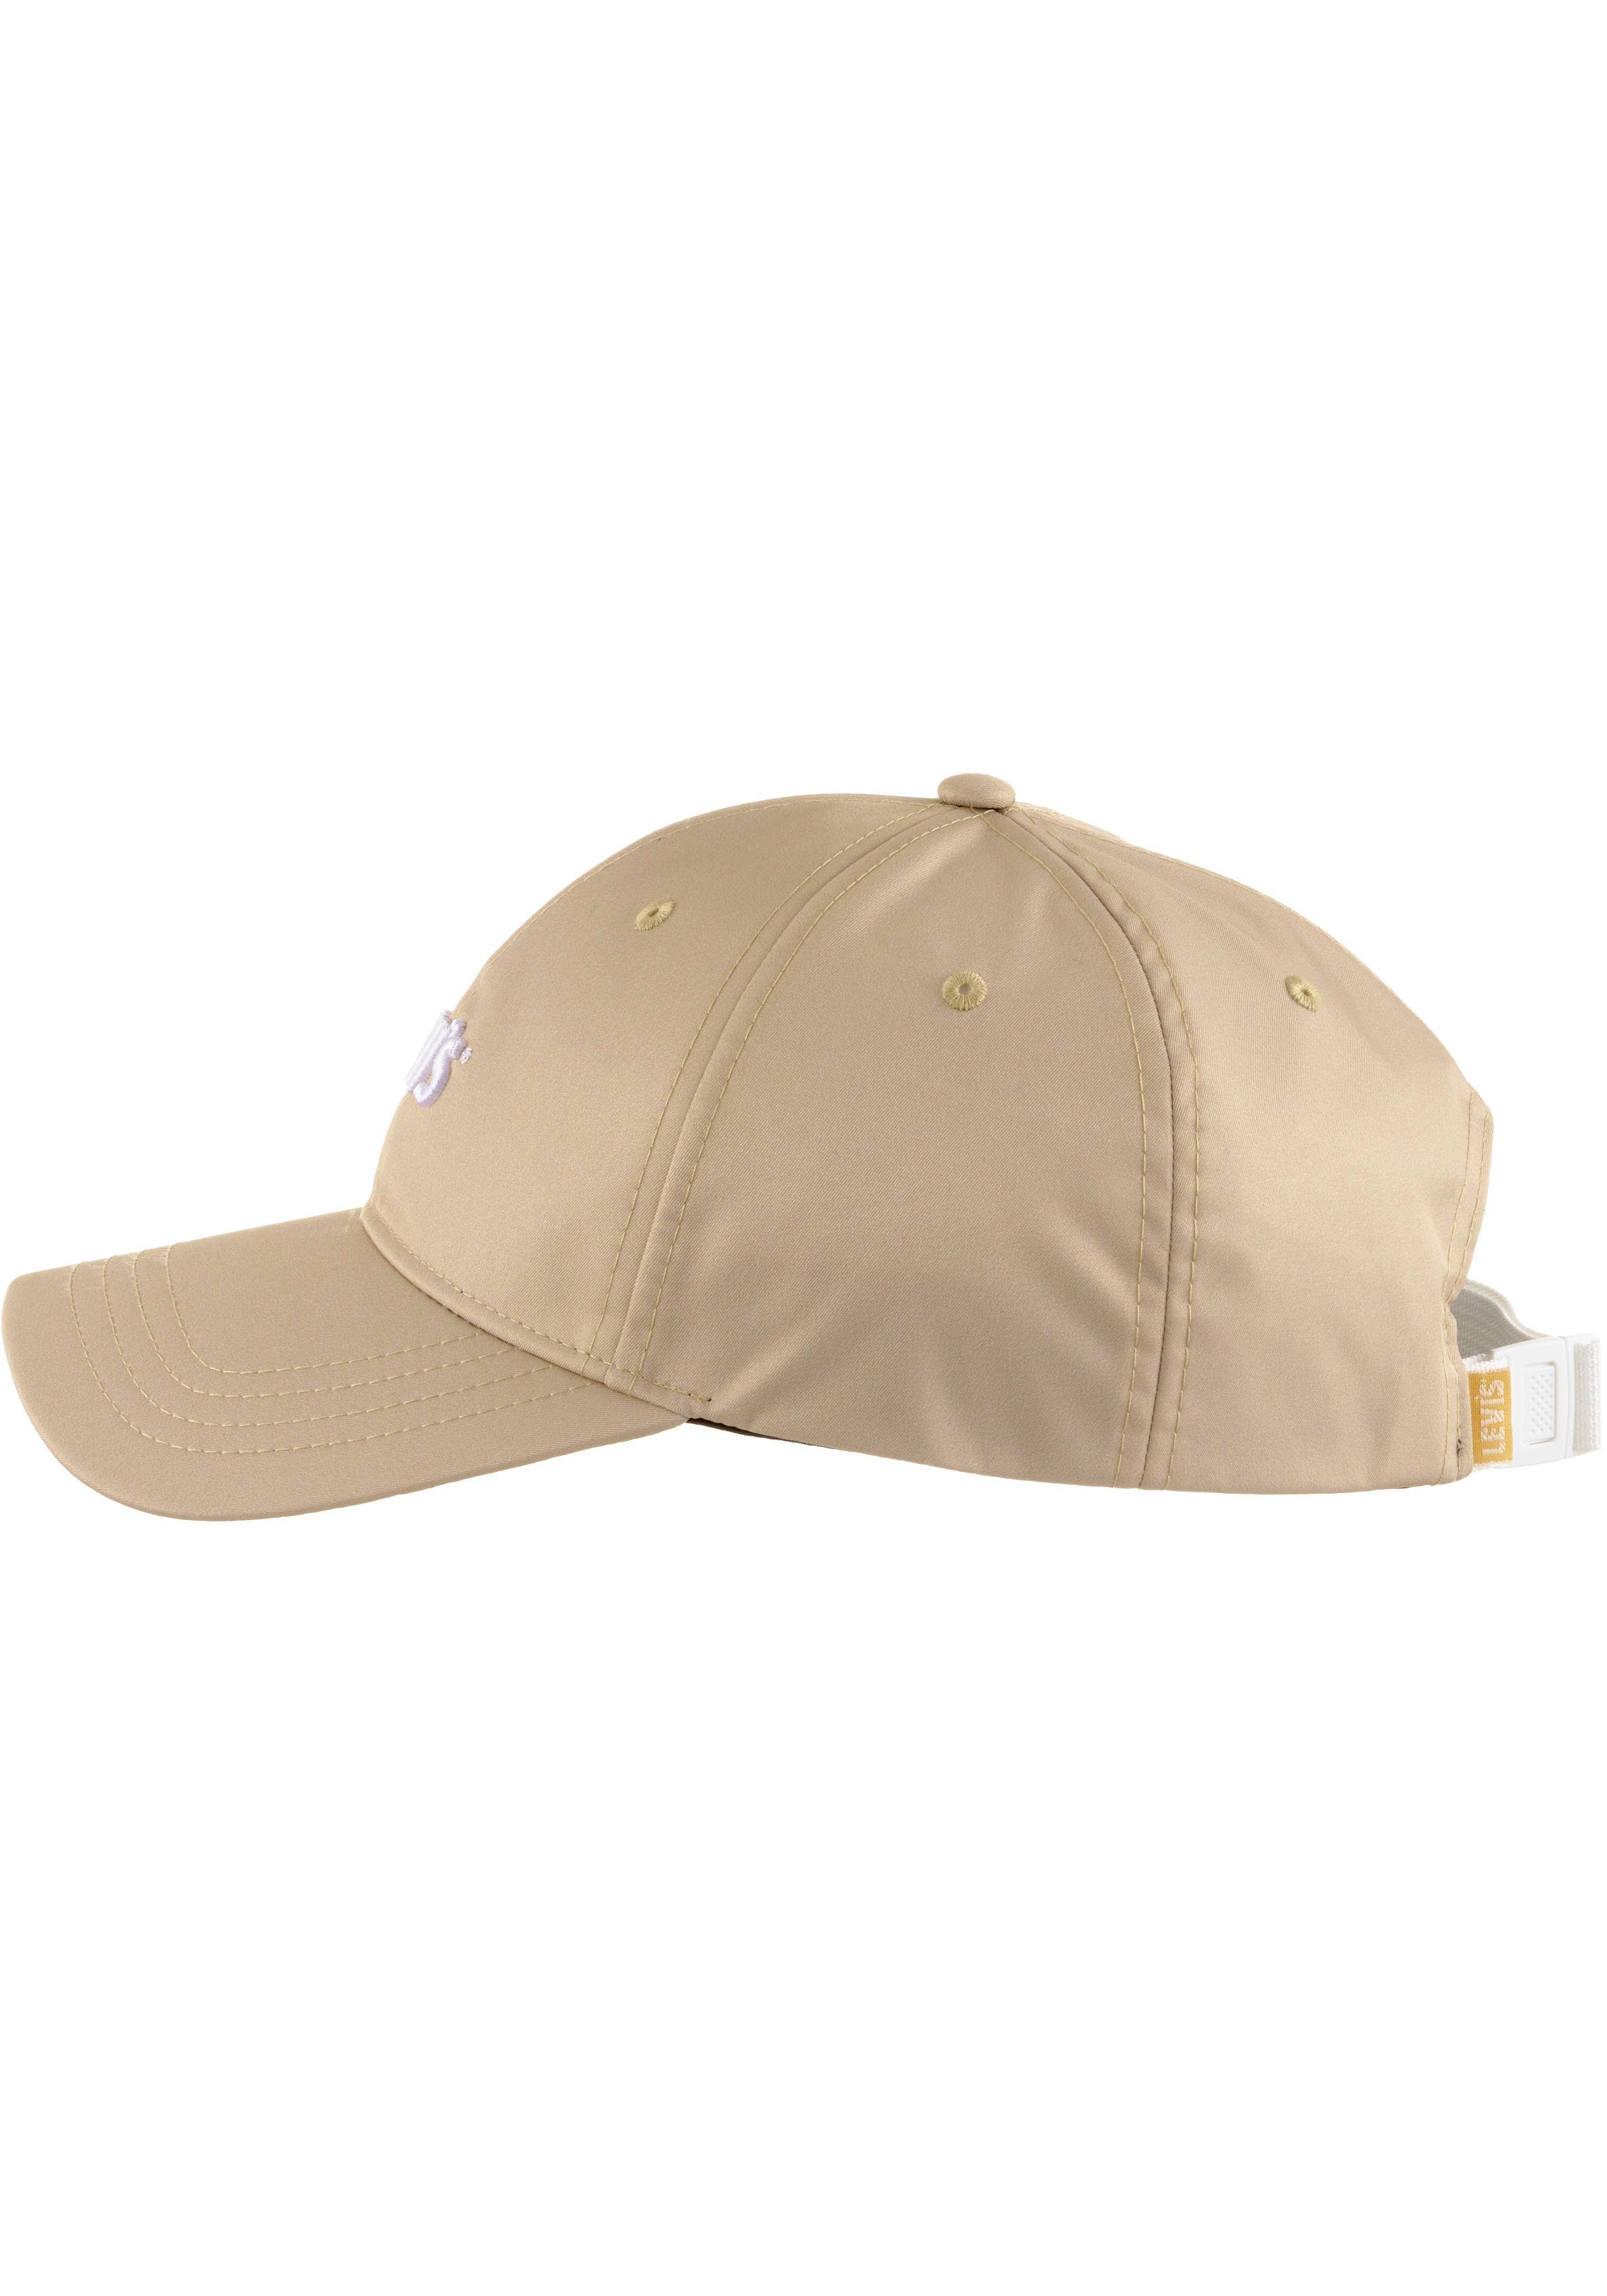 Levi's® Baseball Cap Gold Tab tan natural